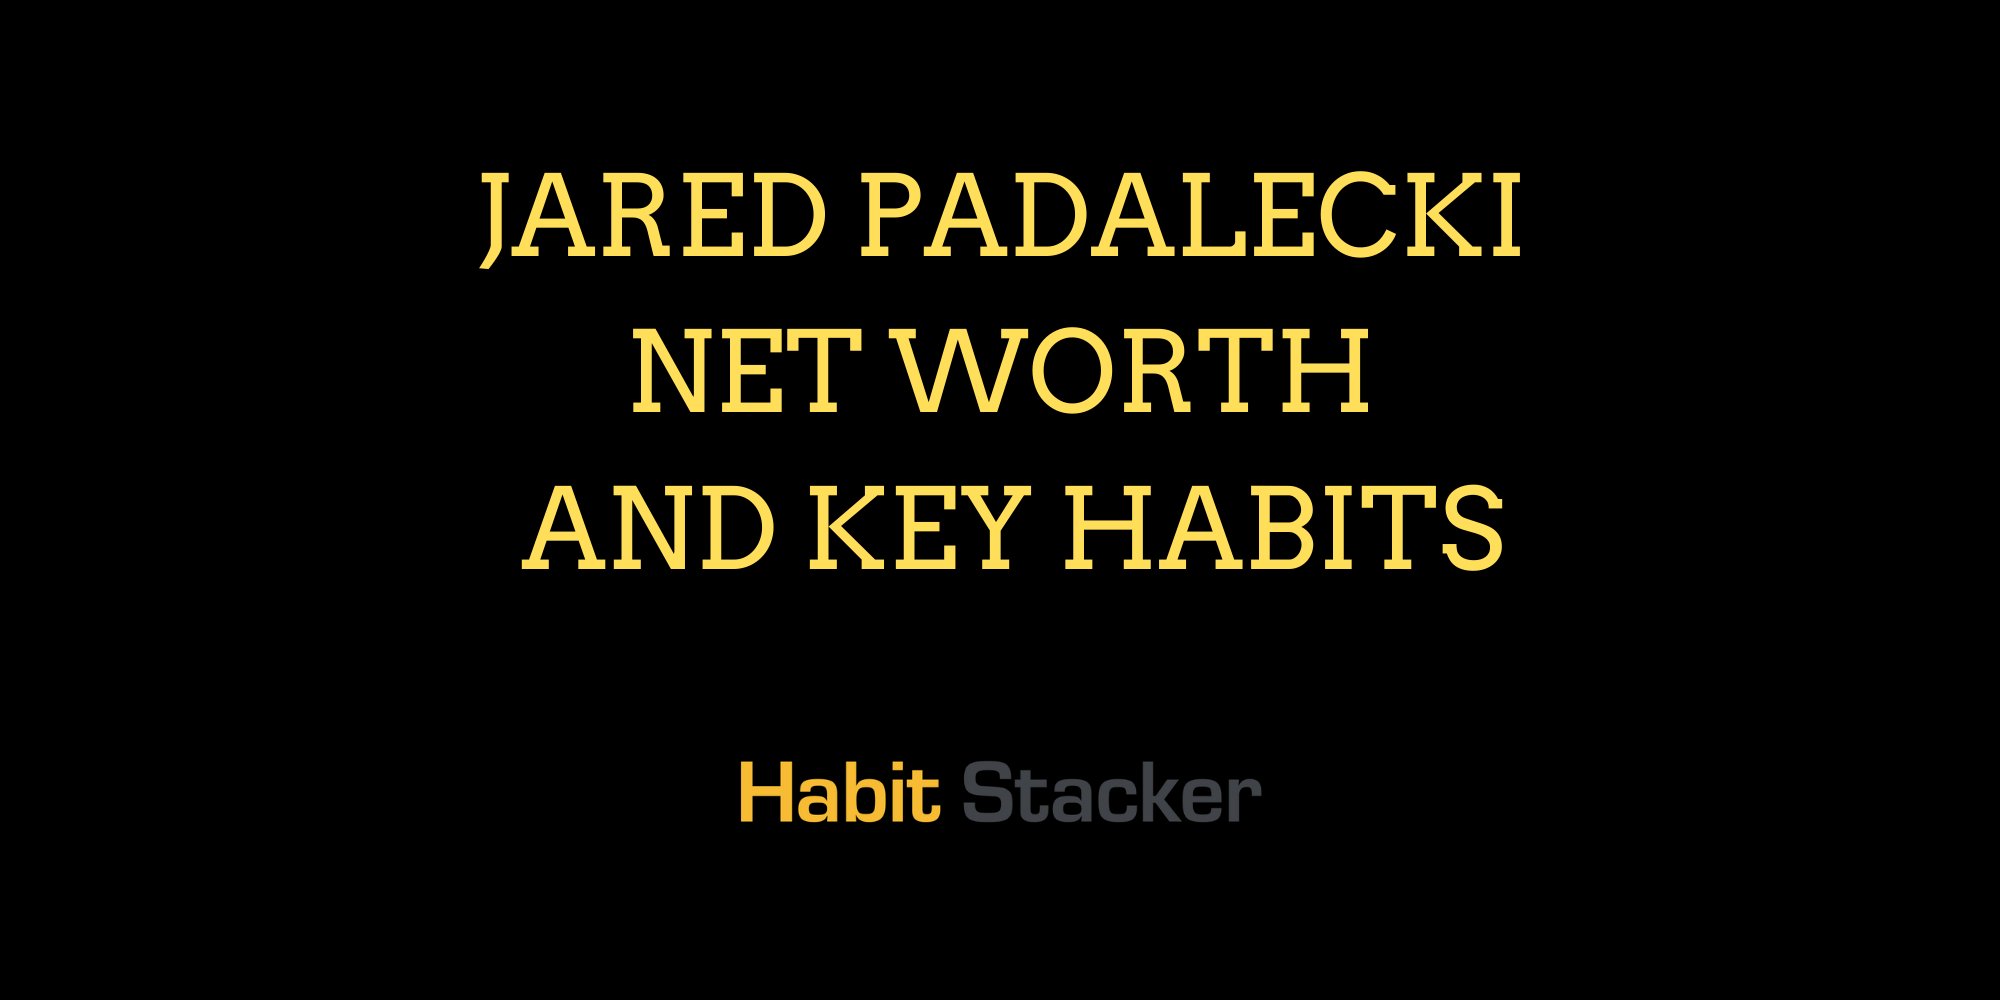 Jared Padalecki Net Worth and Key Habits